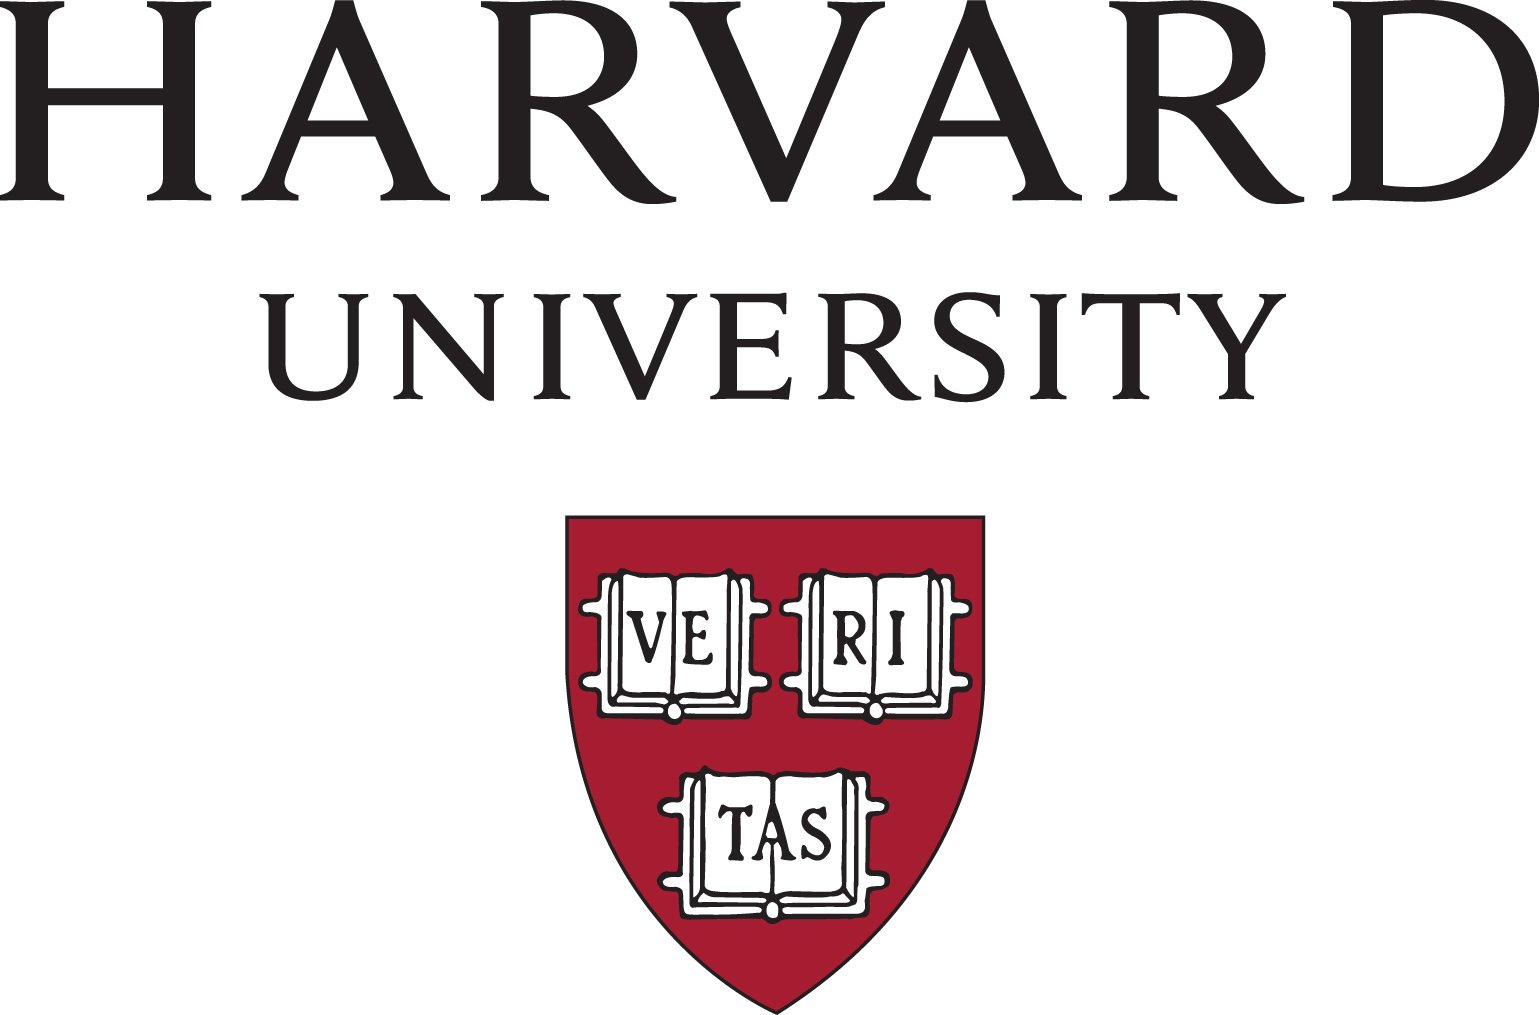 Harvard University Academy Scholars Program in the USA